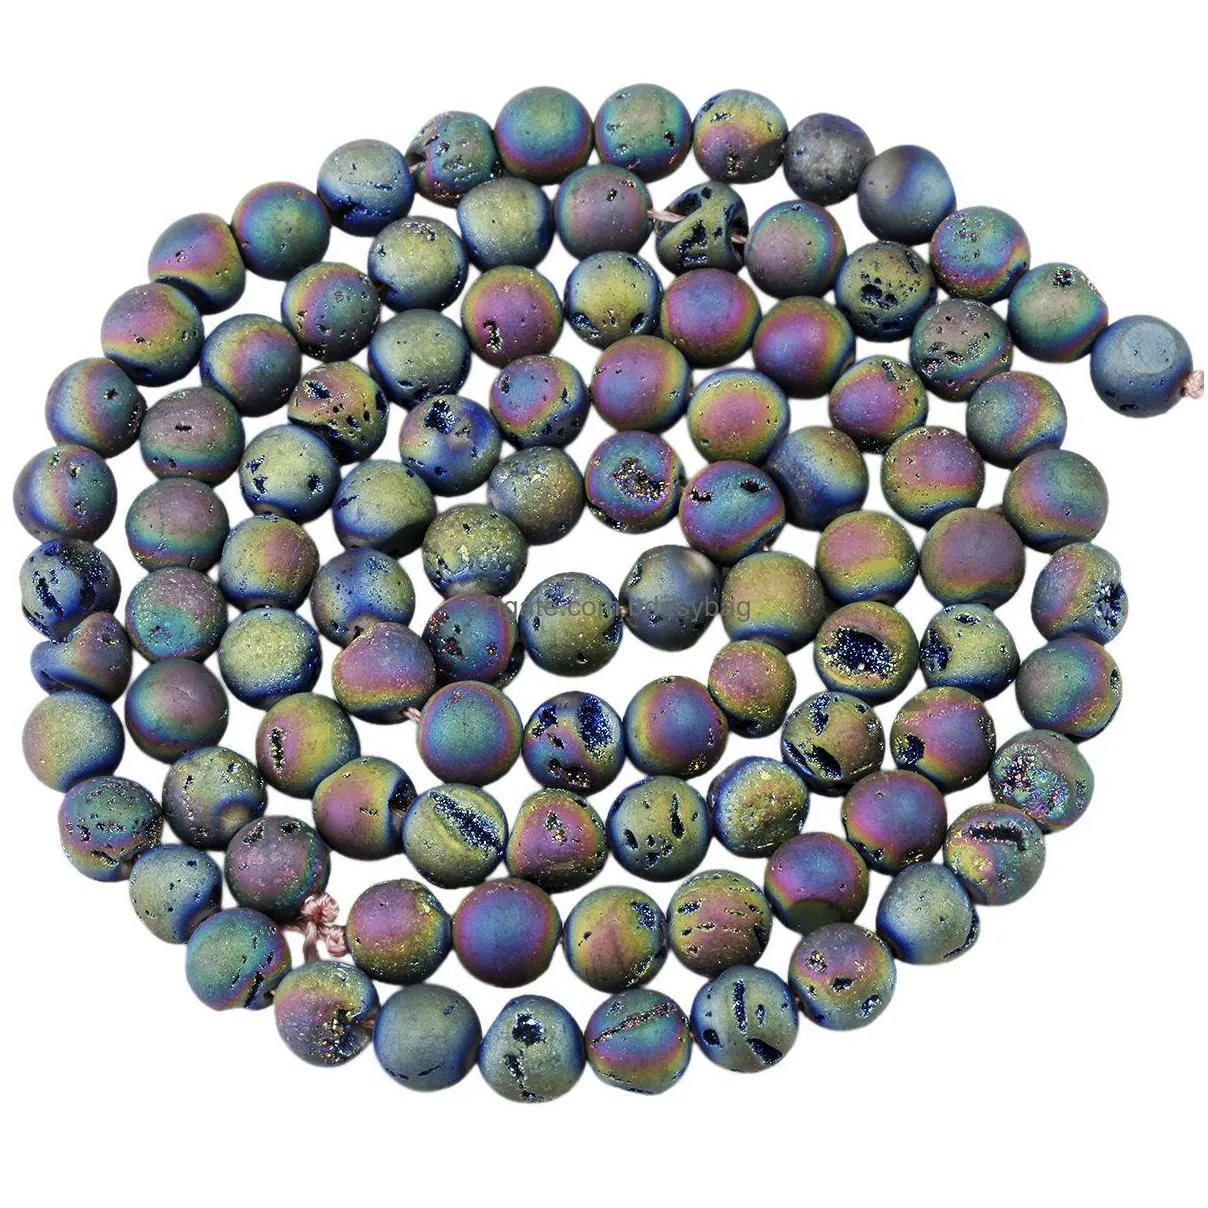 6mm druzy agate crystal round beads 65pcs dursy quartz organic gemstone spherical energy stone healing power for jewelry bracelet mala necklace making 1